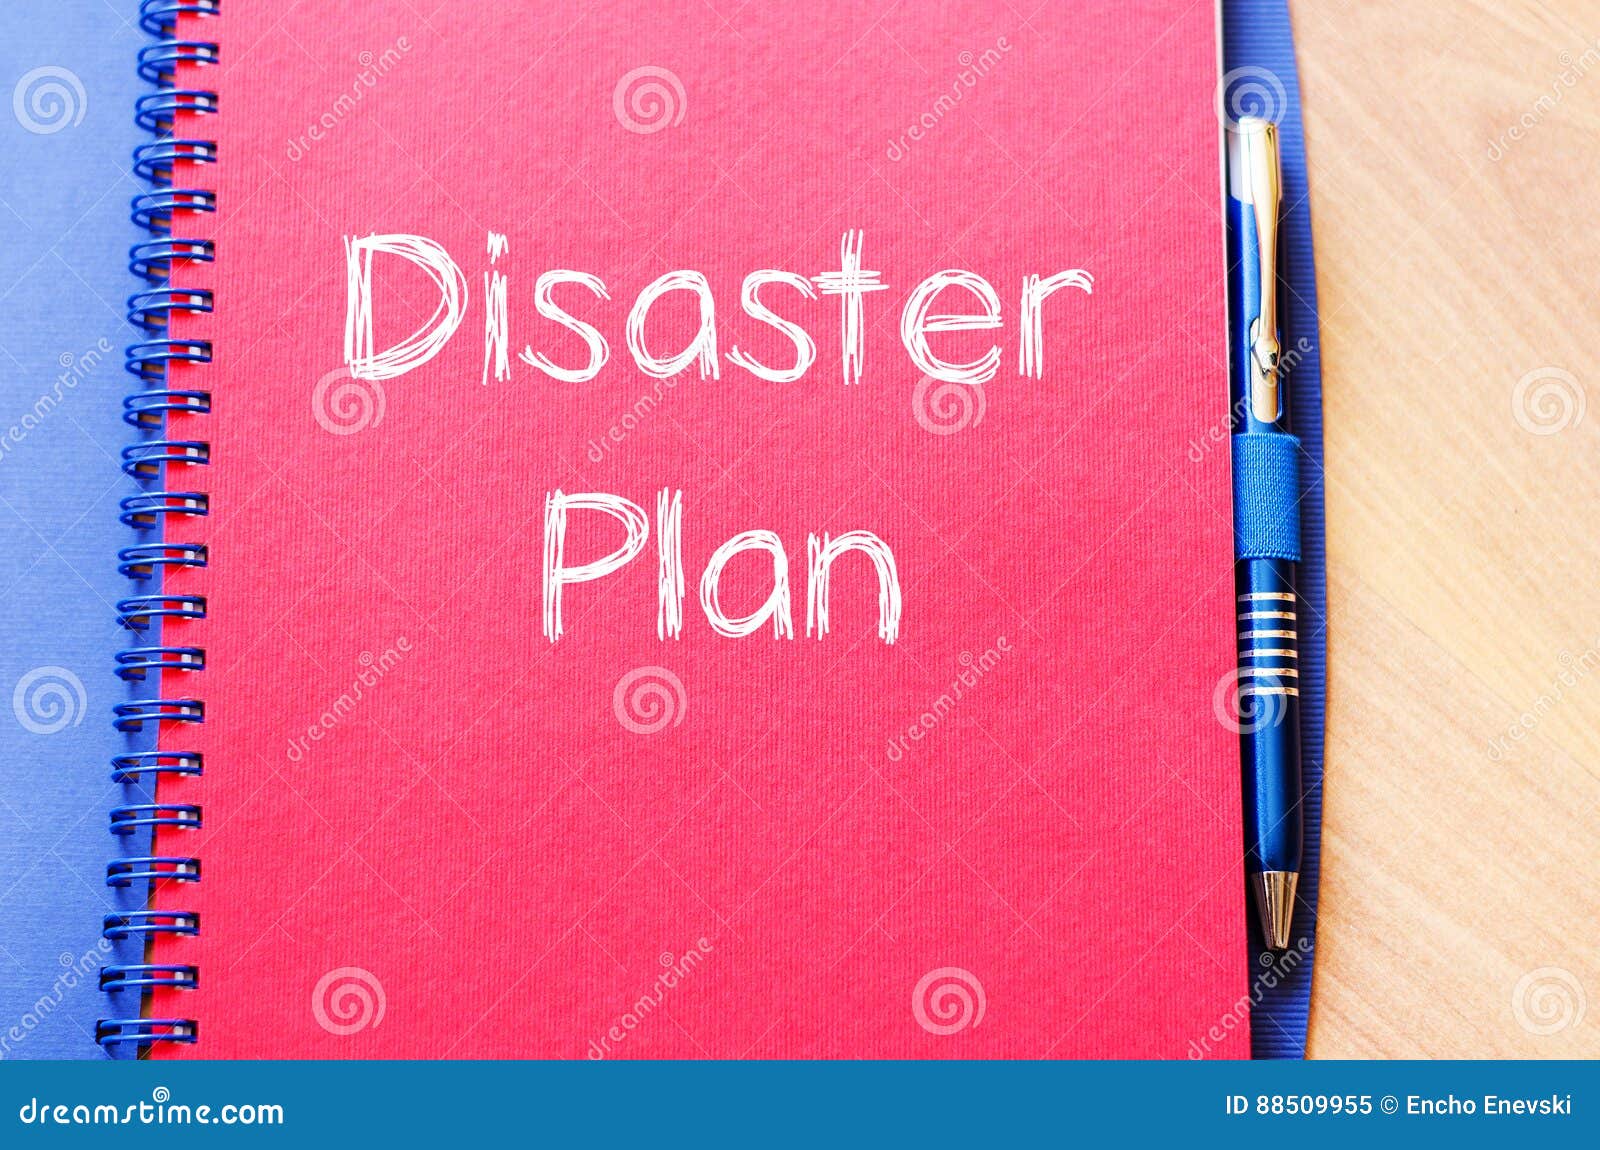 Disaster Plan Write on Notebook Stock Image - Image of prepare ...